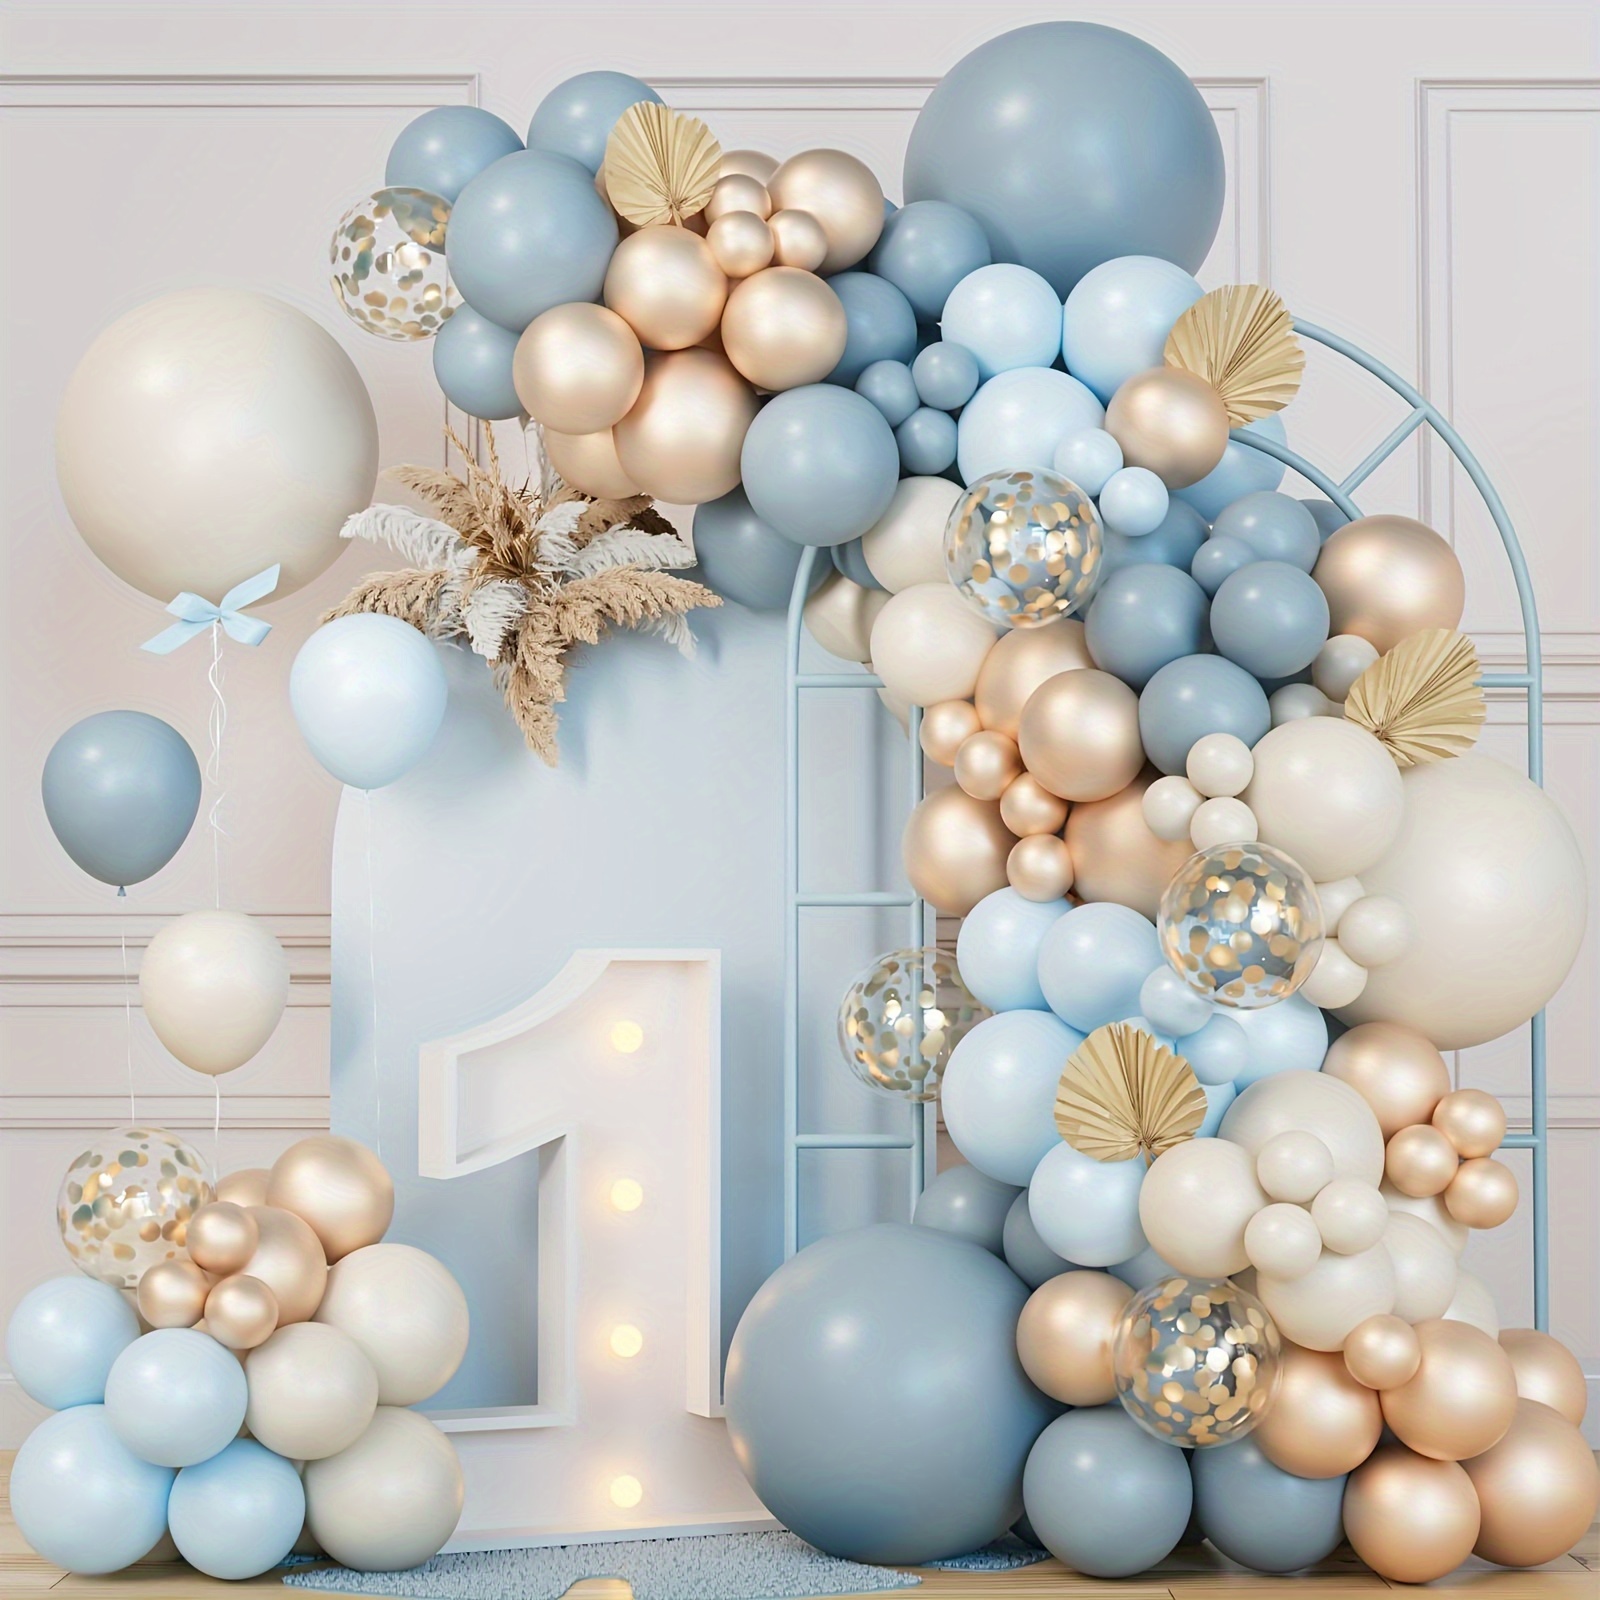 

chic Celebration" 109-piece Elegant Balloon Arch Kit - Slate Gray, Mist Blue, Sand White & Metallic Gold For Gender Reveal, Anniversary, Wedding, Bridal Shower & Birthday Party Decorations